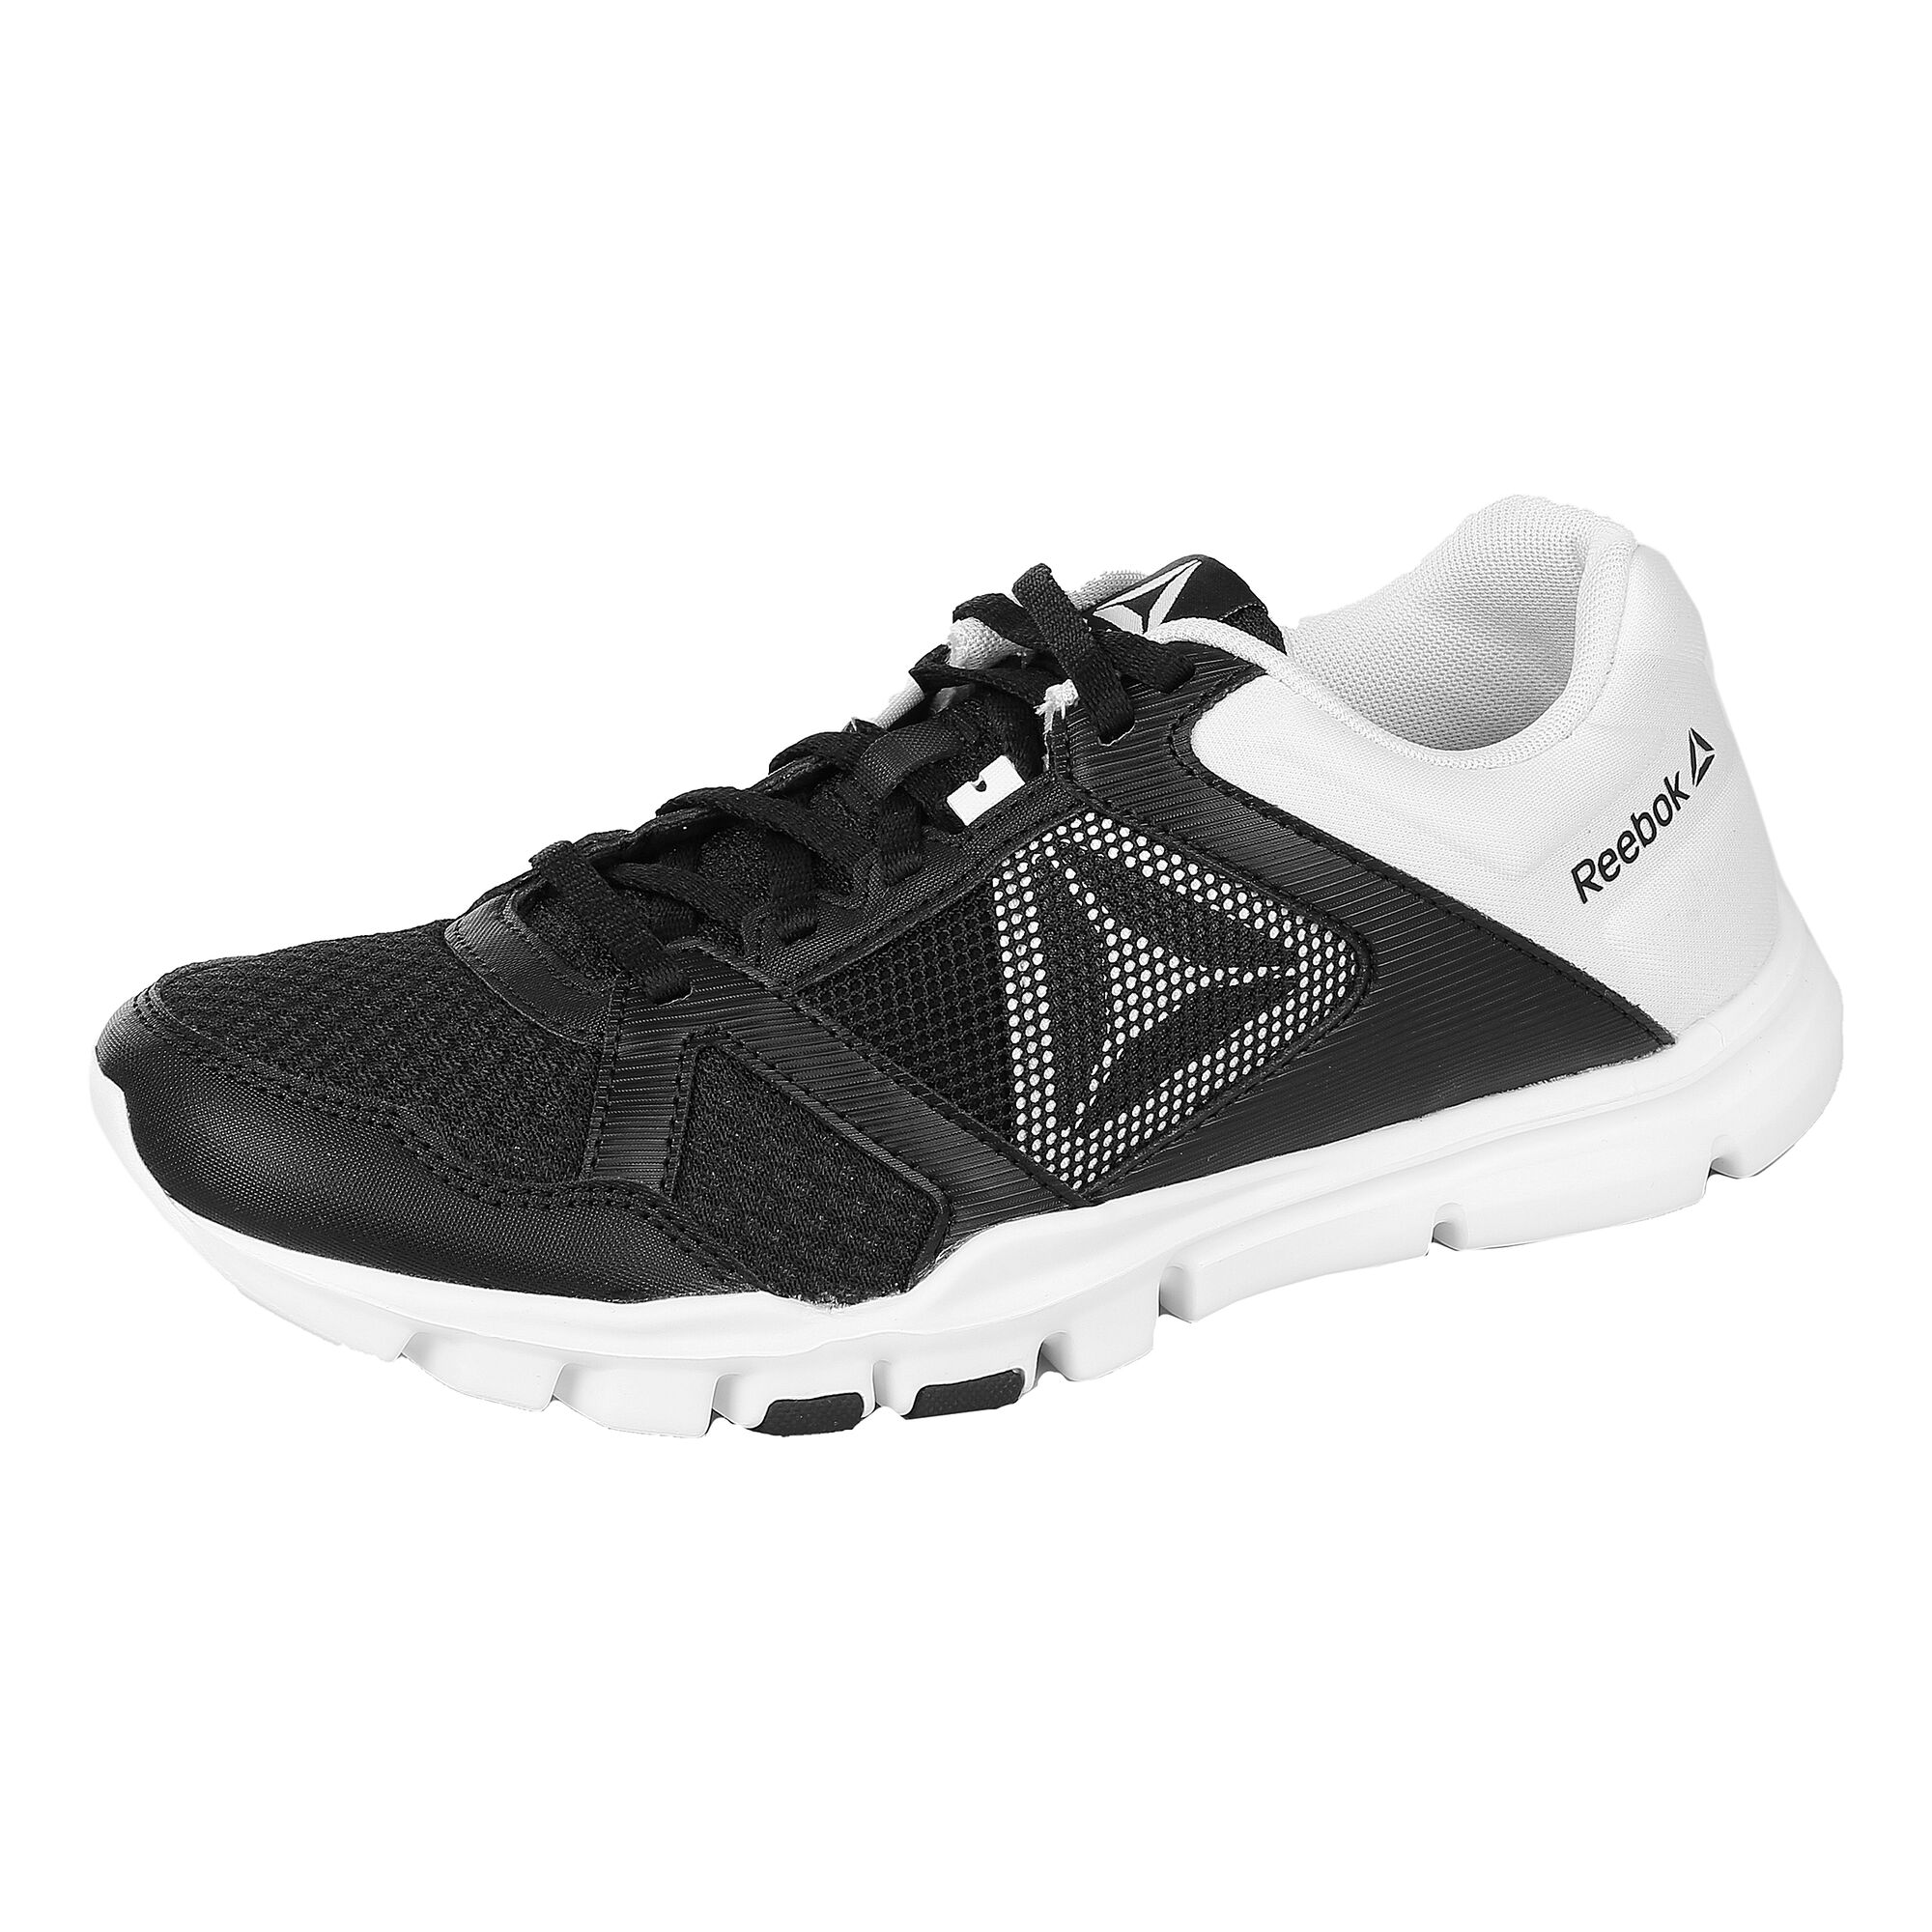 Chip saltar saldar buy Reebok Yourflex Trainette 10 MT Fitness Shoe Women - Black, White  online | Tennis-Point